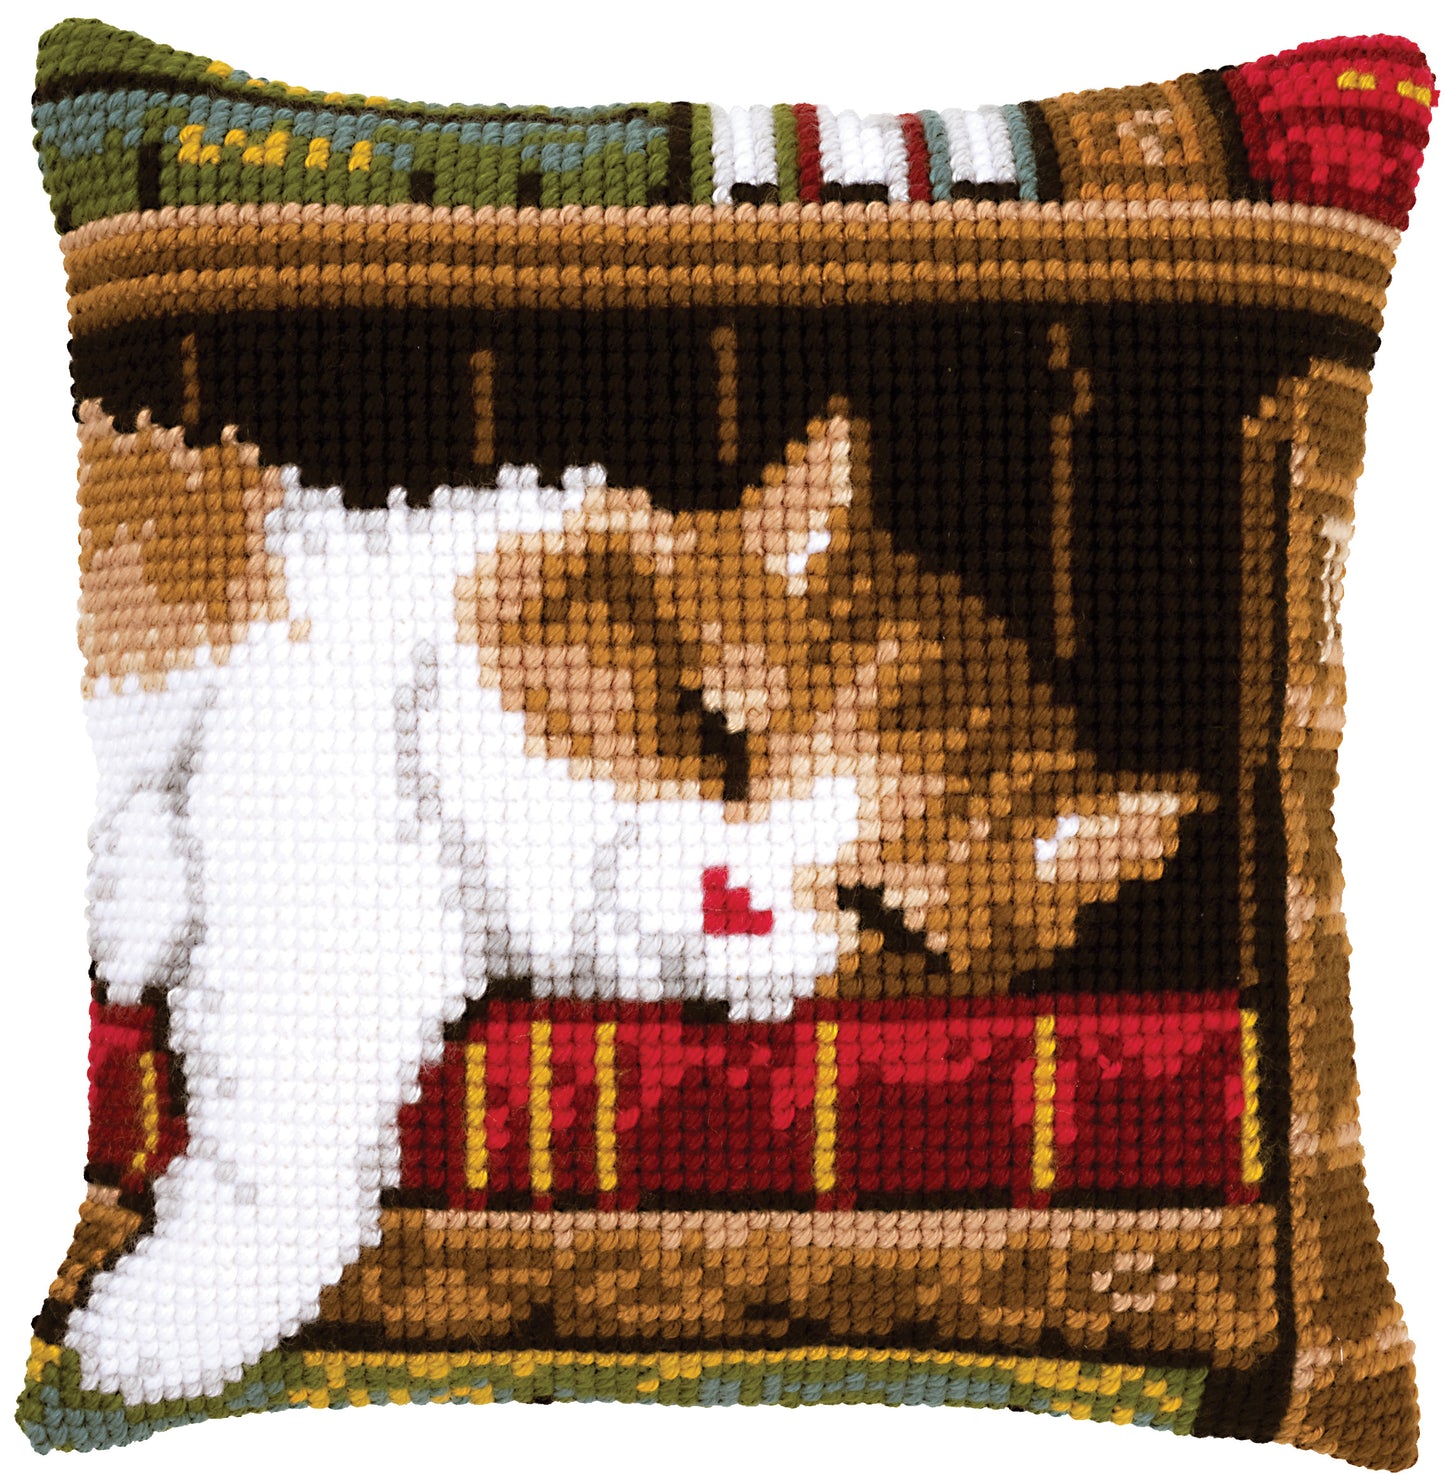 Sleeping Cat Large Holed Cross Stitch Cushion Kit by Vervaco